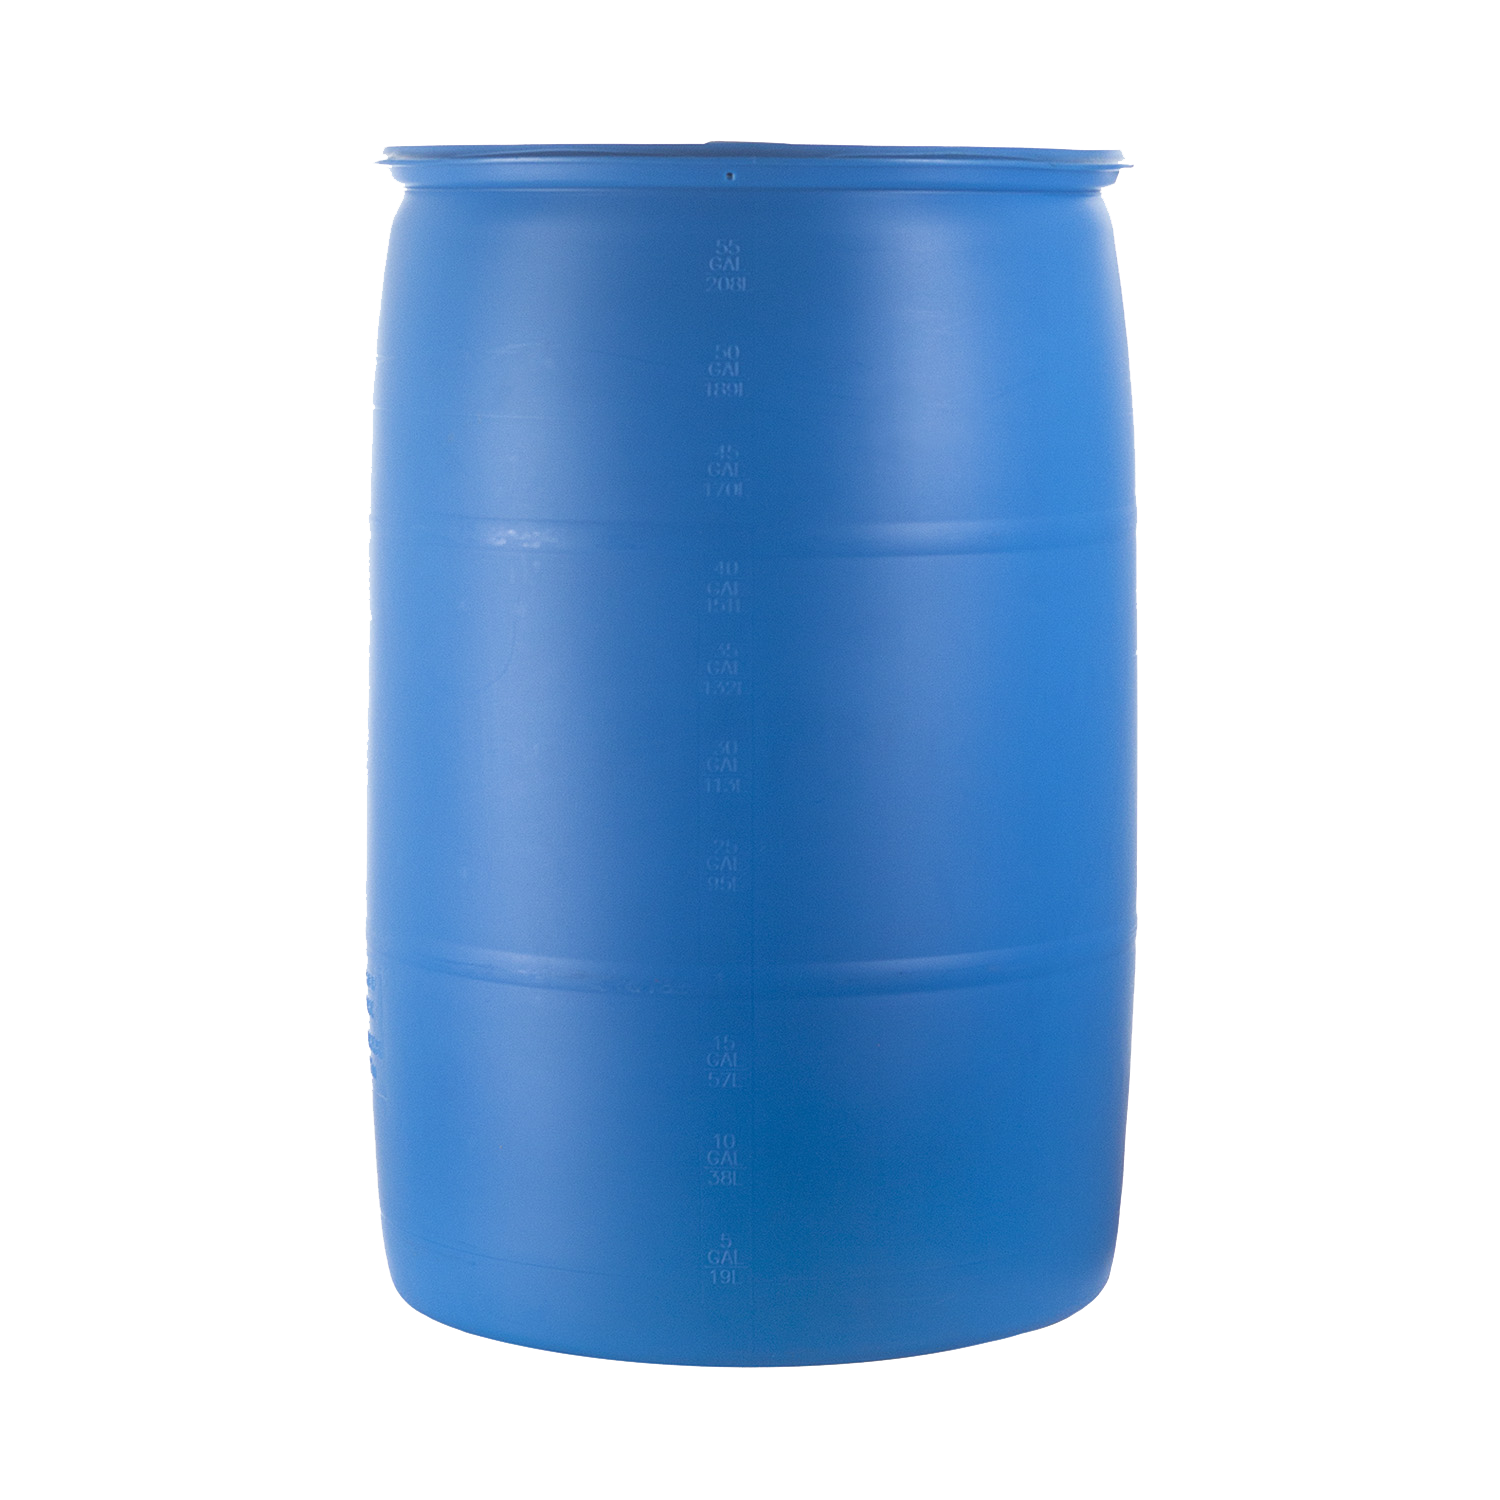 Water Barrel 55 Gallon Drum